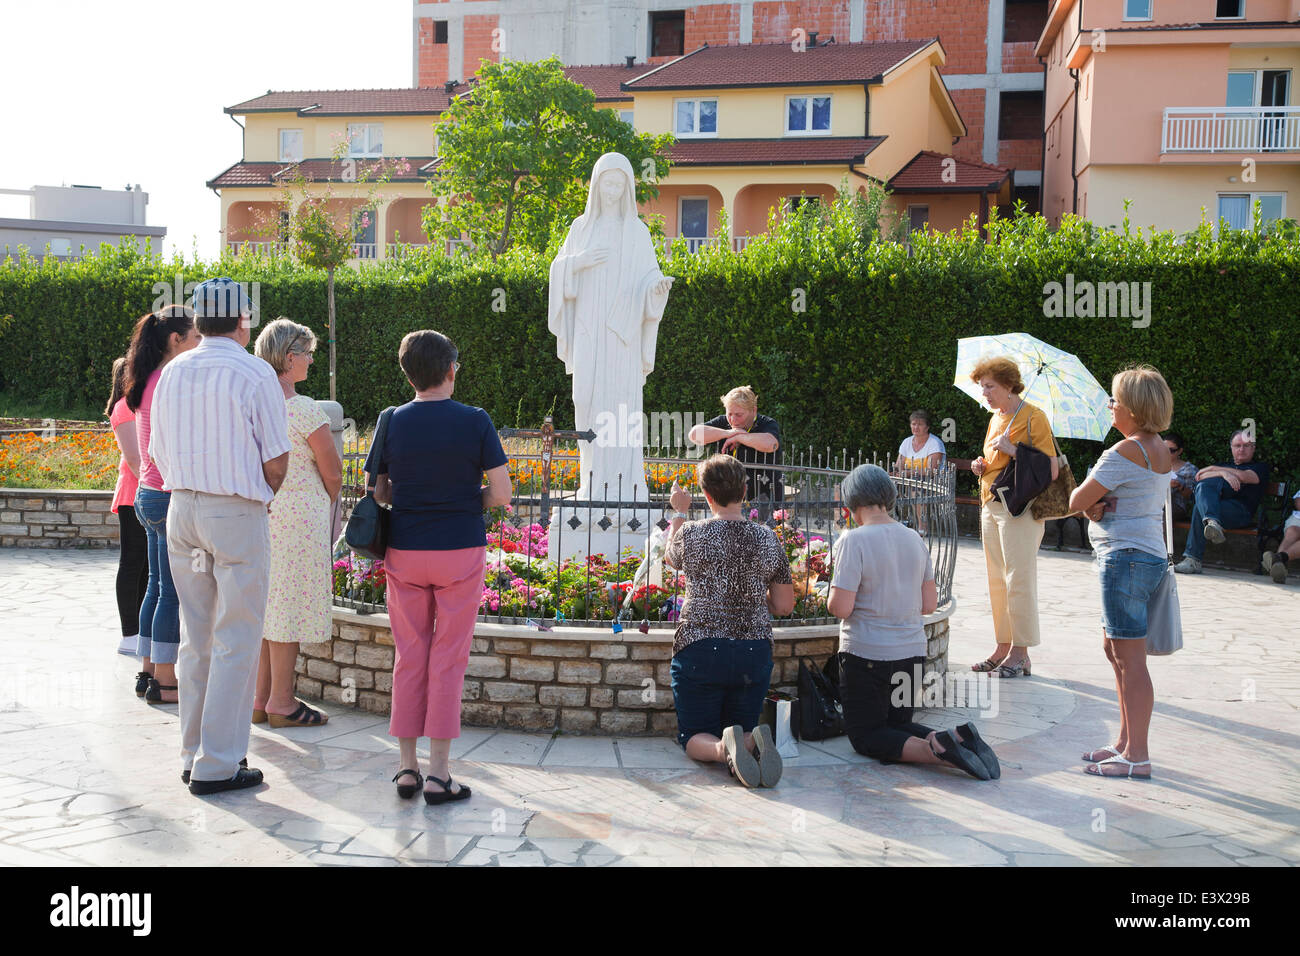 La statua della Madonna, st. James Church, Medugorje, Bosnia e Erzegovina, europa Foto Stock